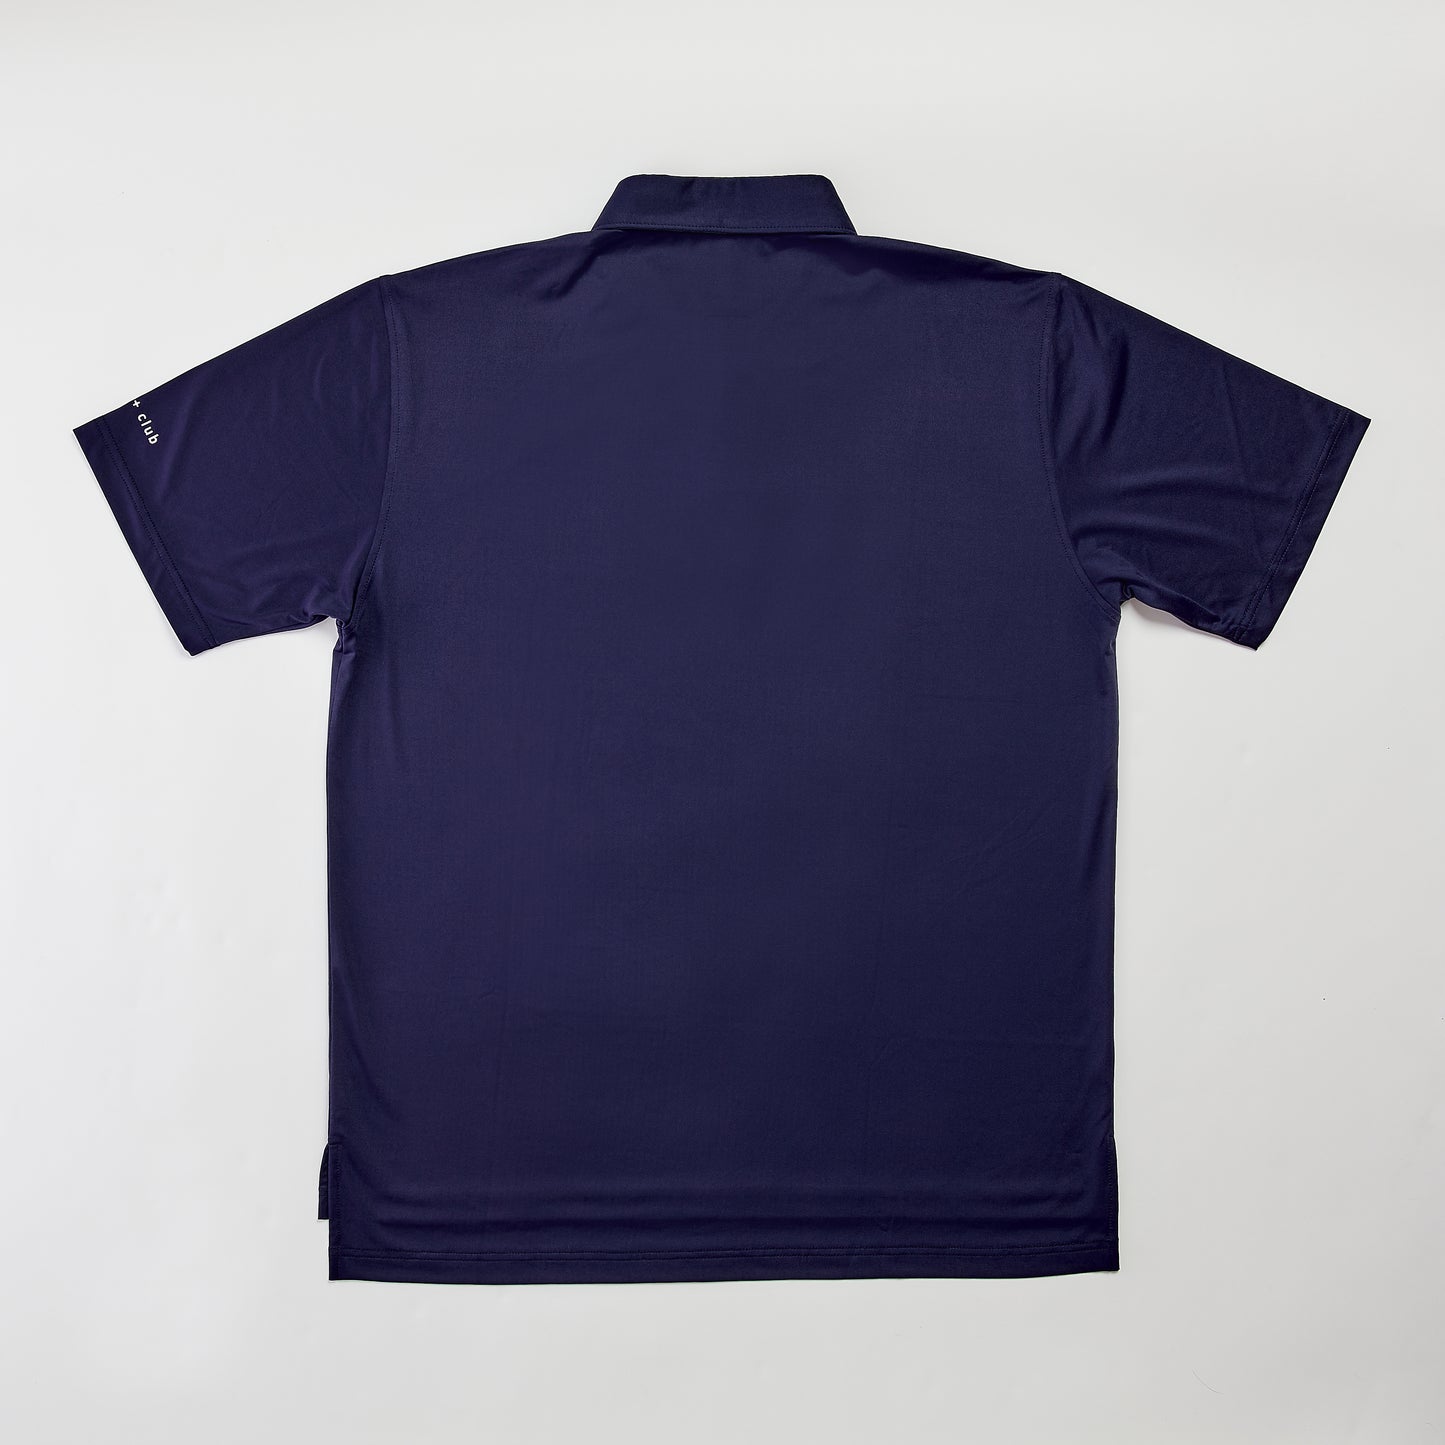 Performance Golf Shirt - Navy